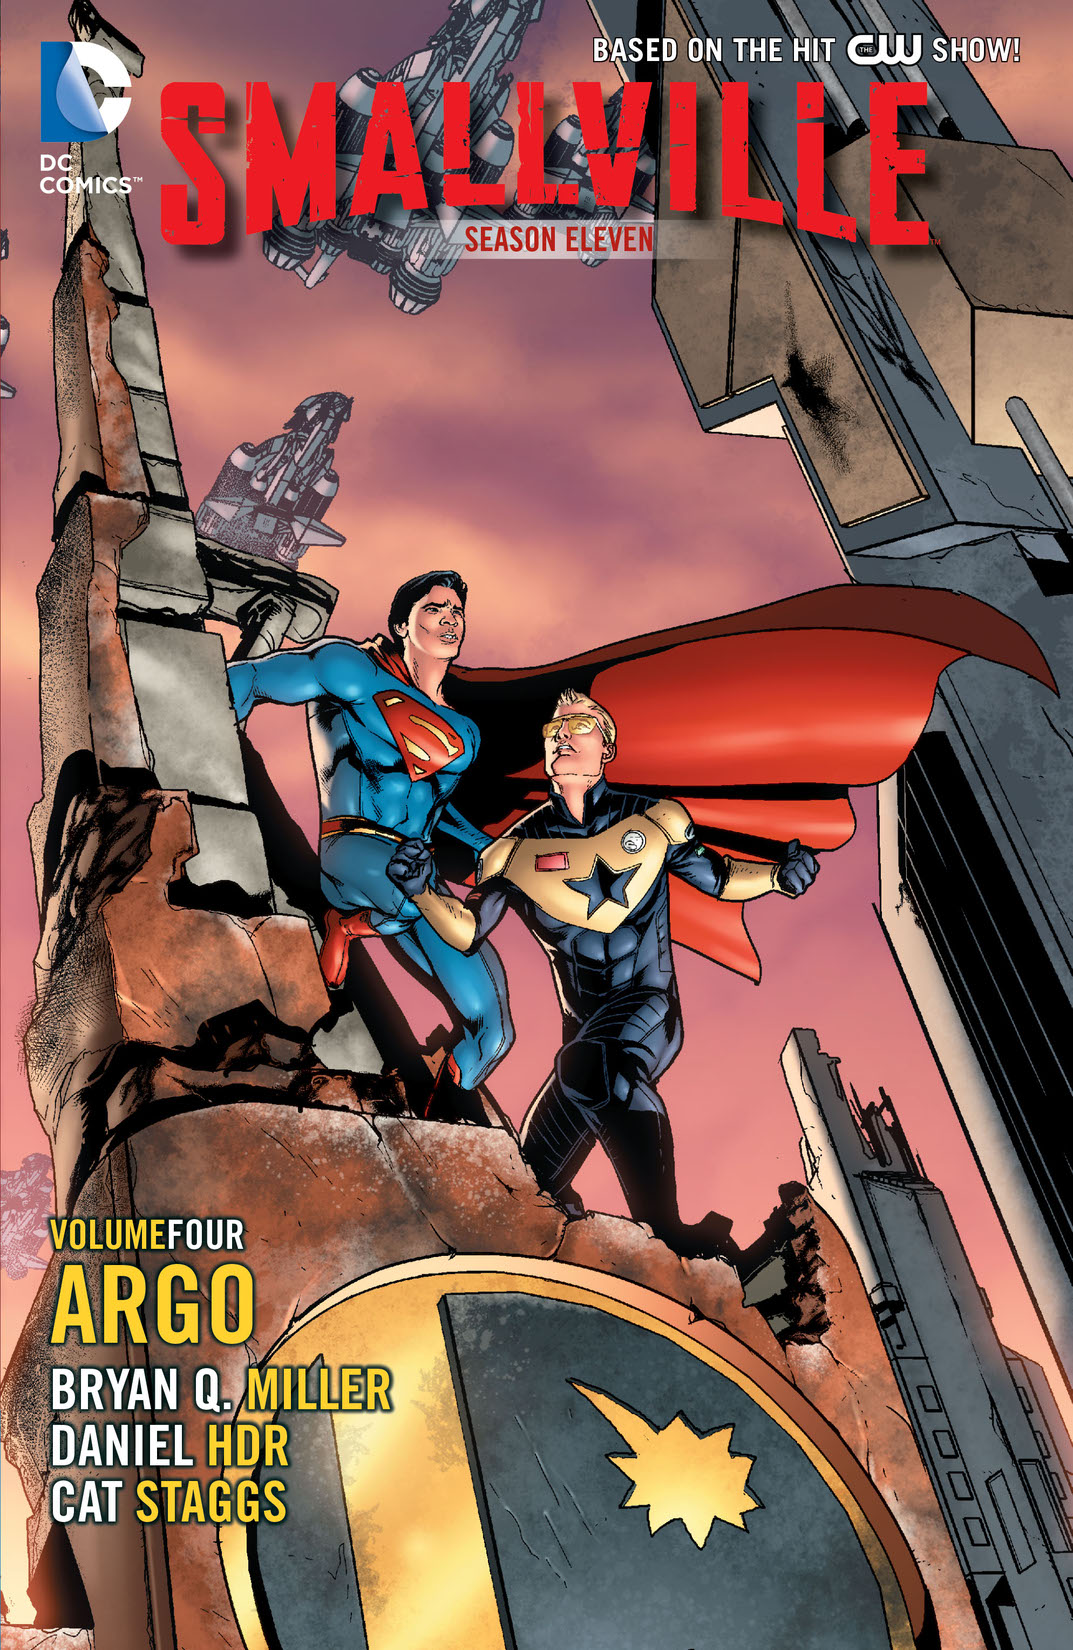 Smallville Season 11 Vol. 4: Argo preview images